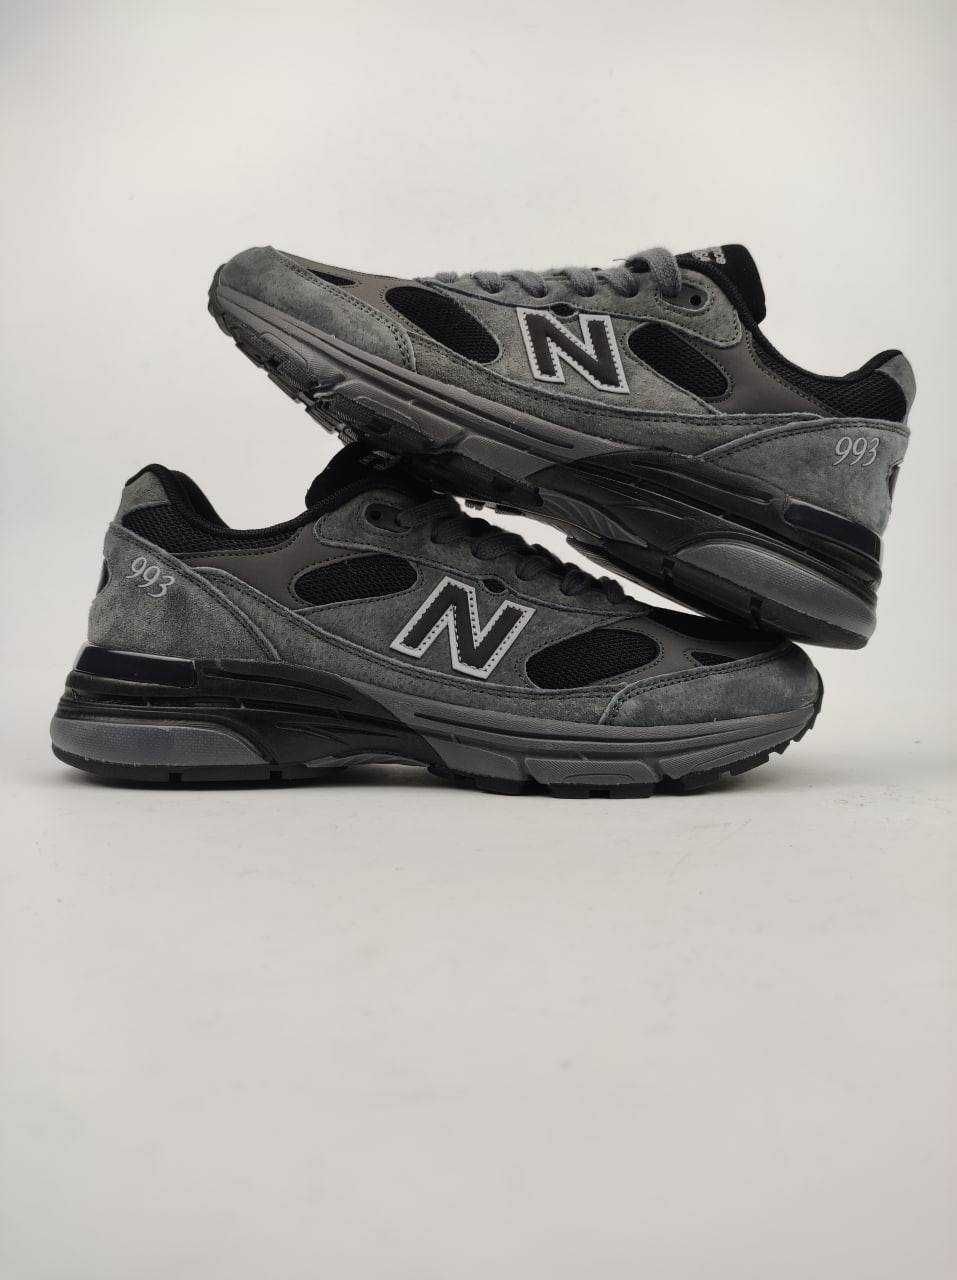 New Balance 993 Gray Black